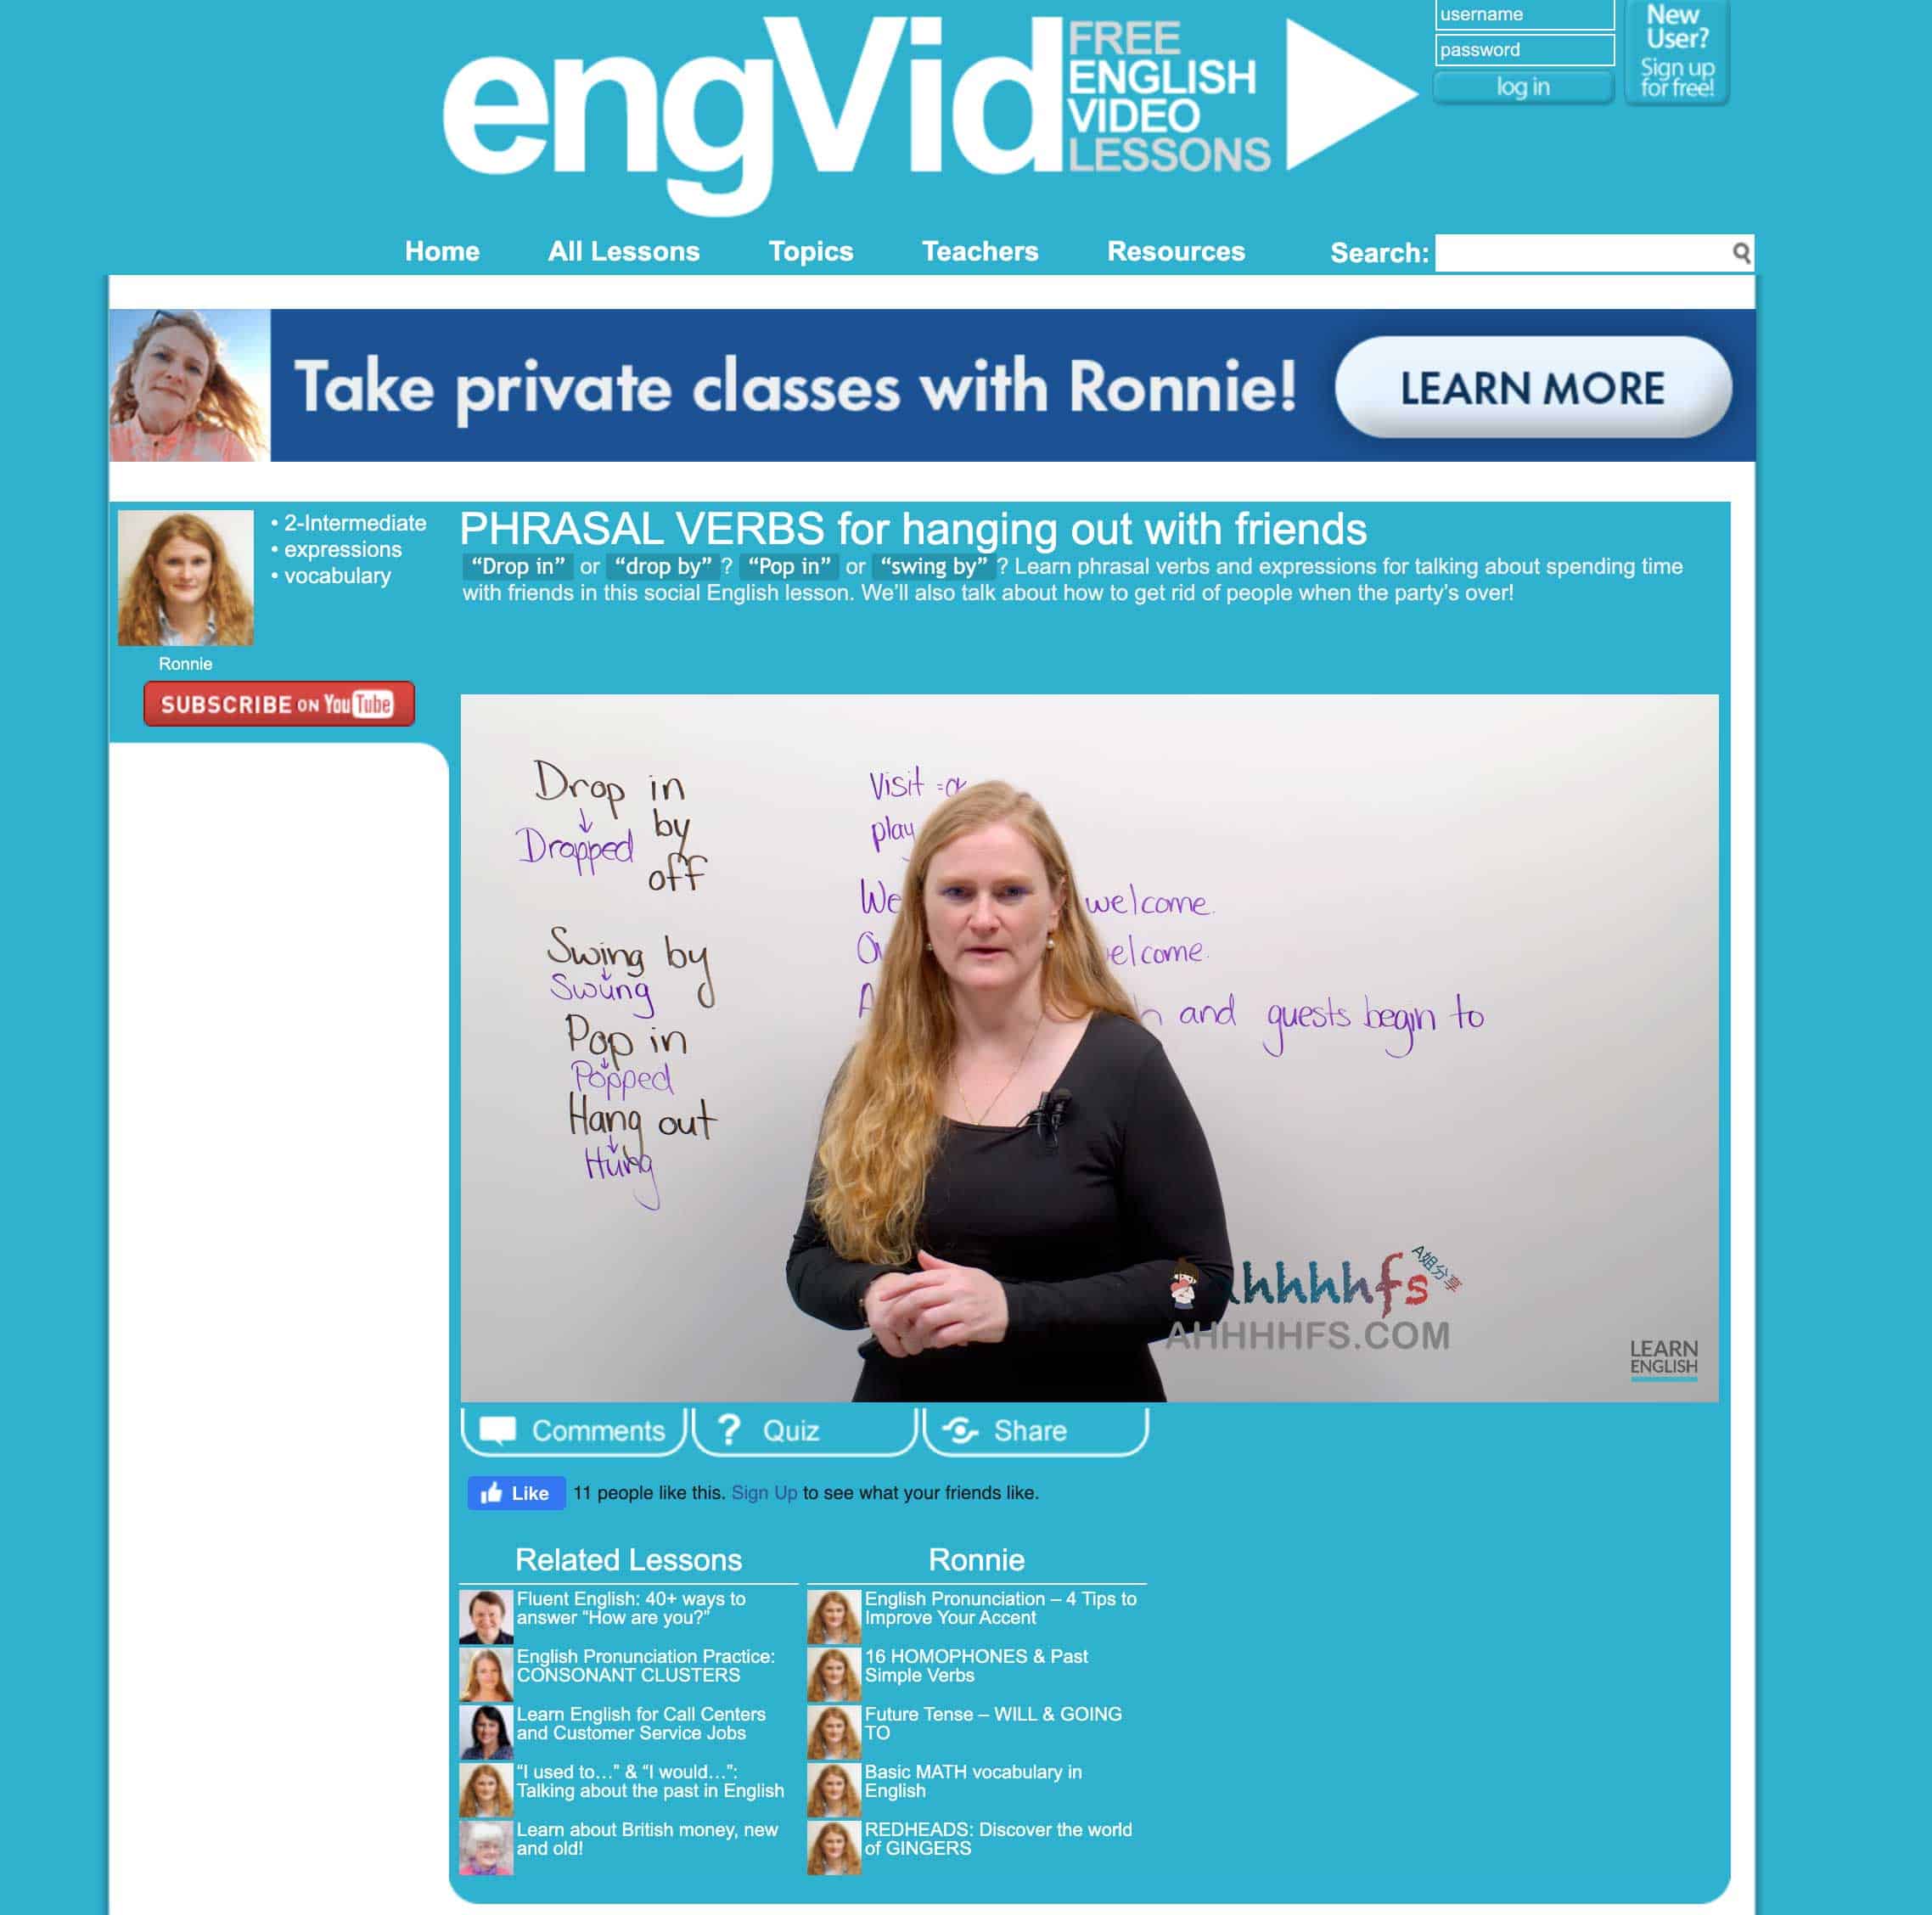 engVid-公益性英语视频教学网站在线学习高质量英语课程- A姐分享